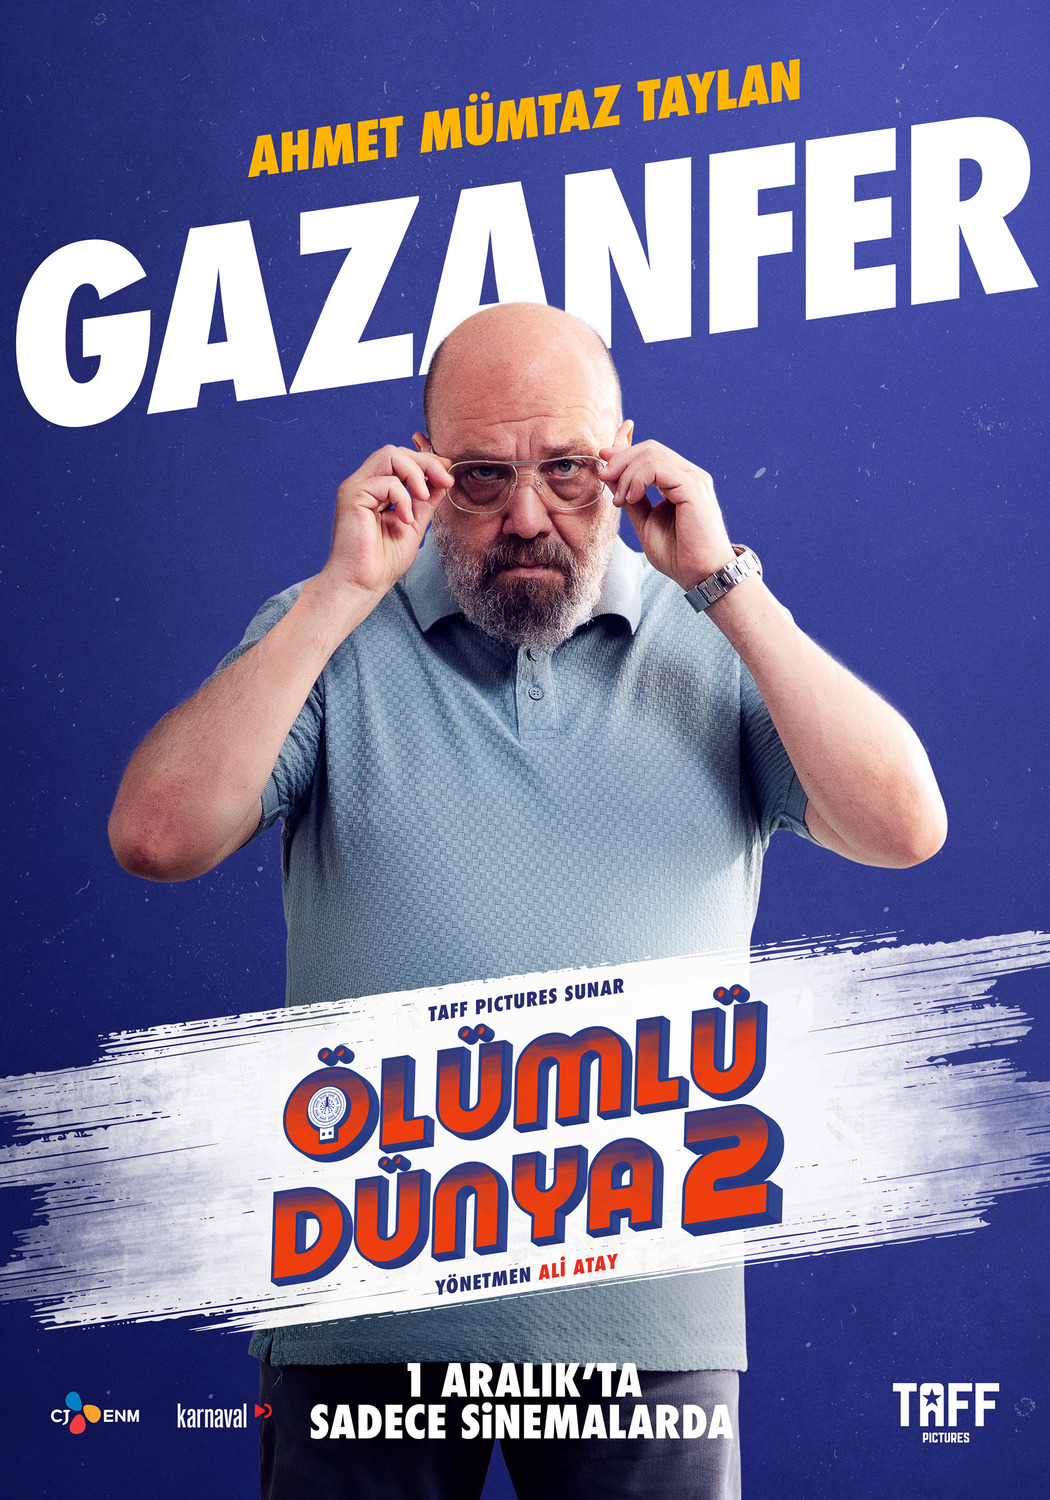 Extra Large Movie Poster Image for Ölümlü Dünya 2 (#3 of 11)